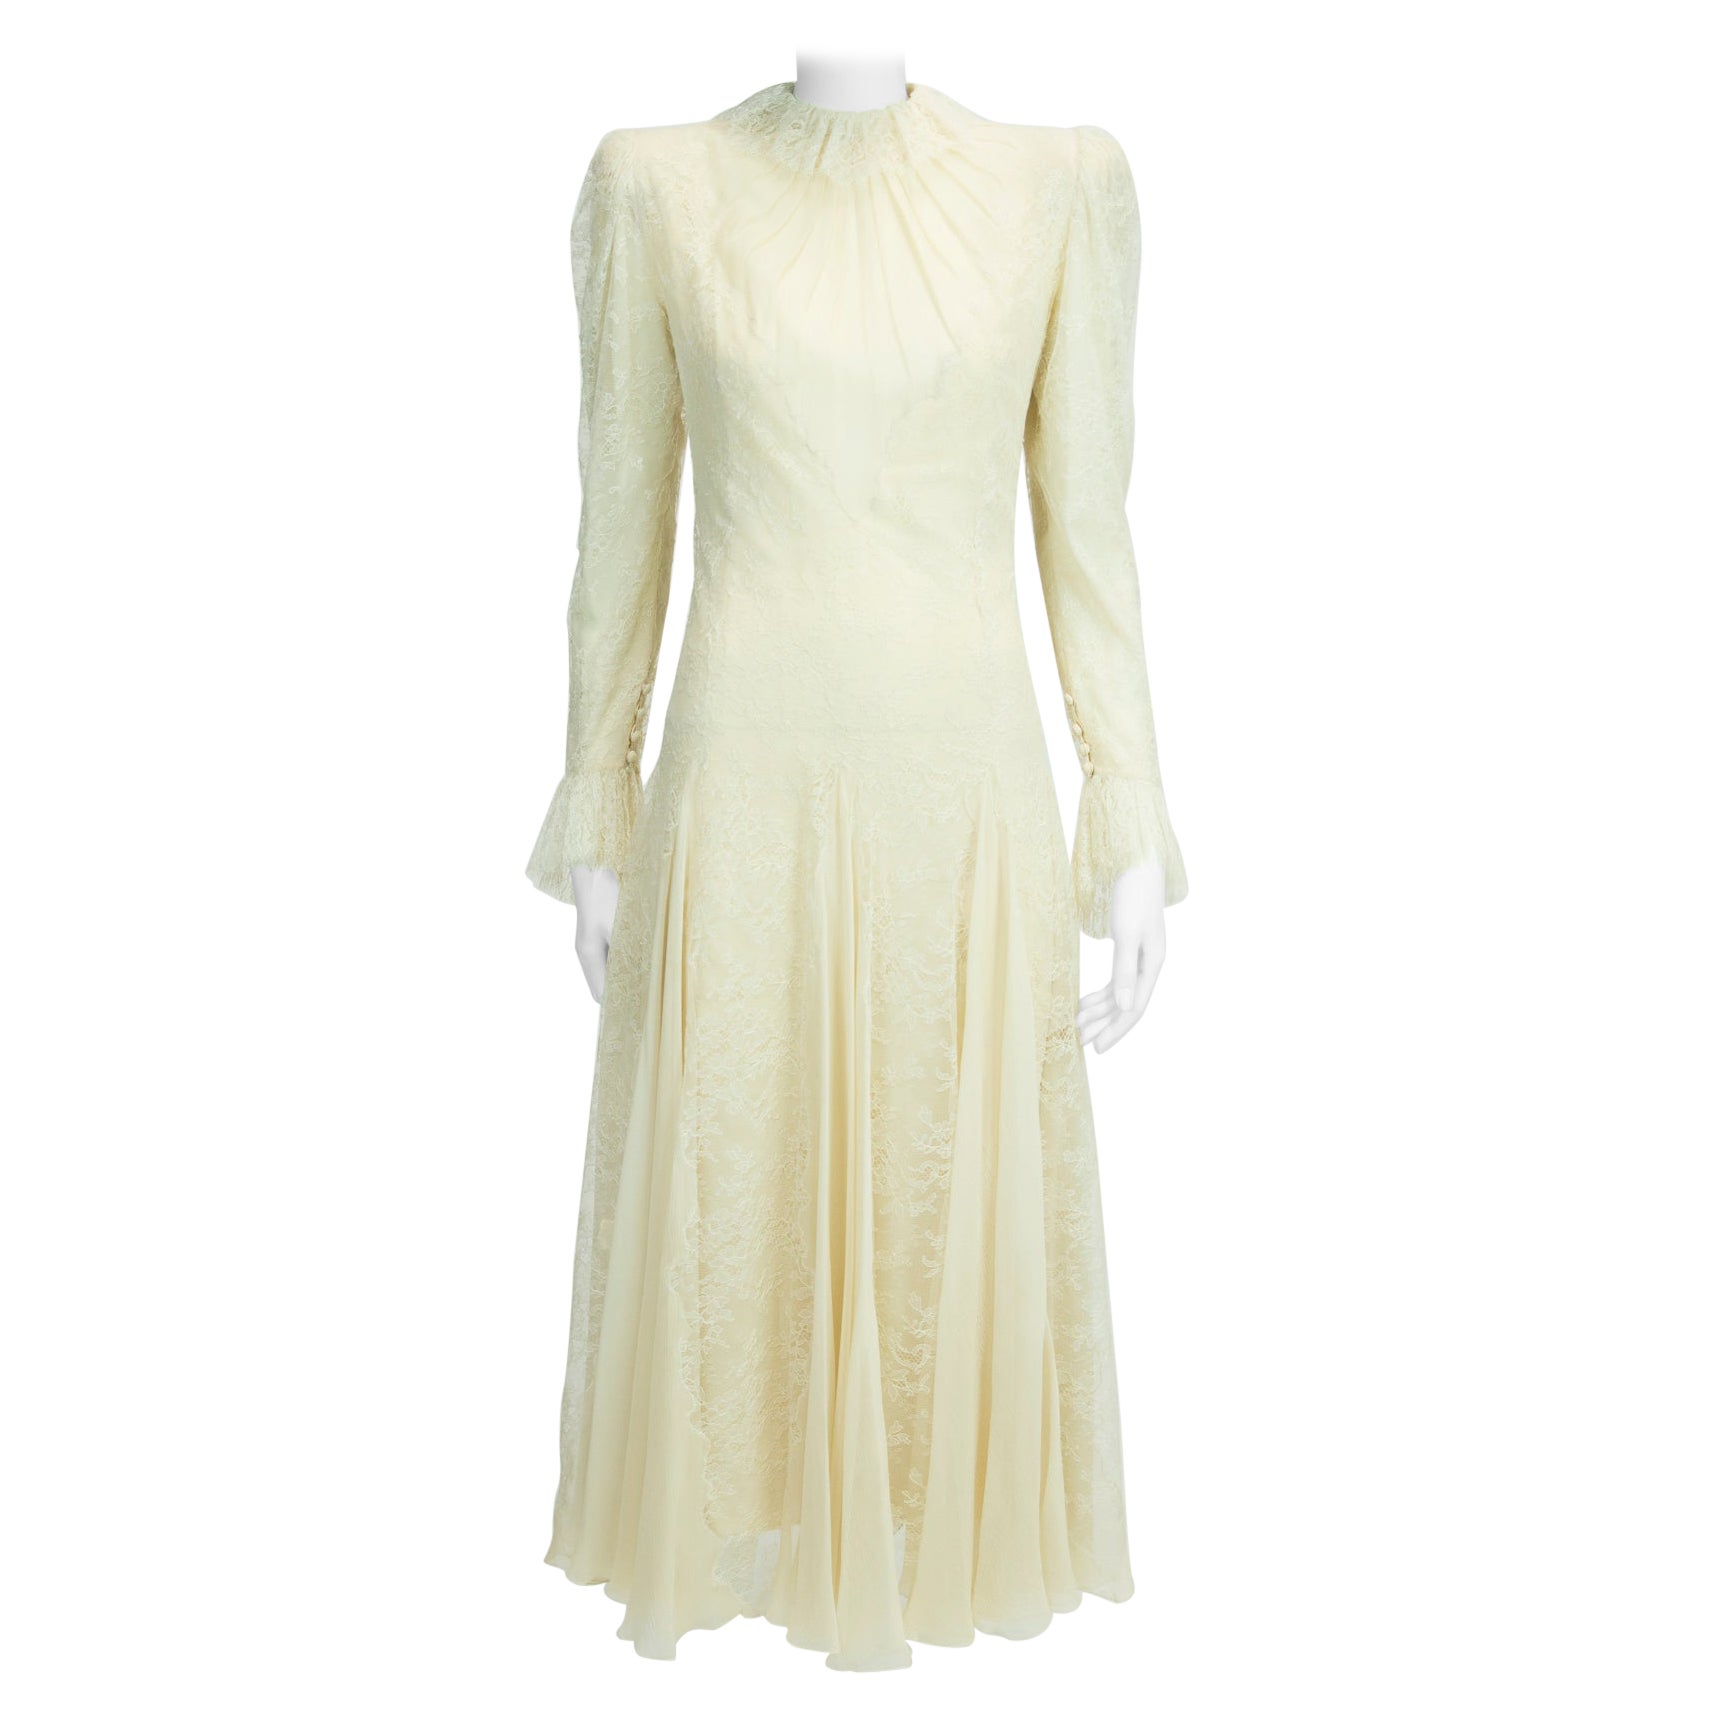 Exquisite Jean Louis Scherrer Couture Silk Chiffon & Lace-Trimmed Dress For Sale